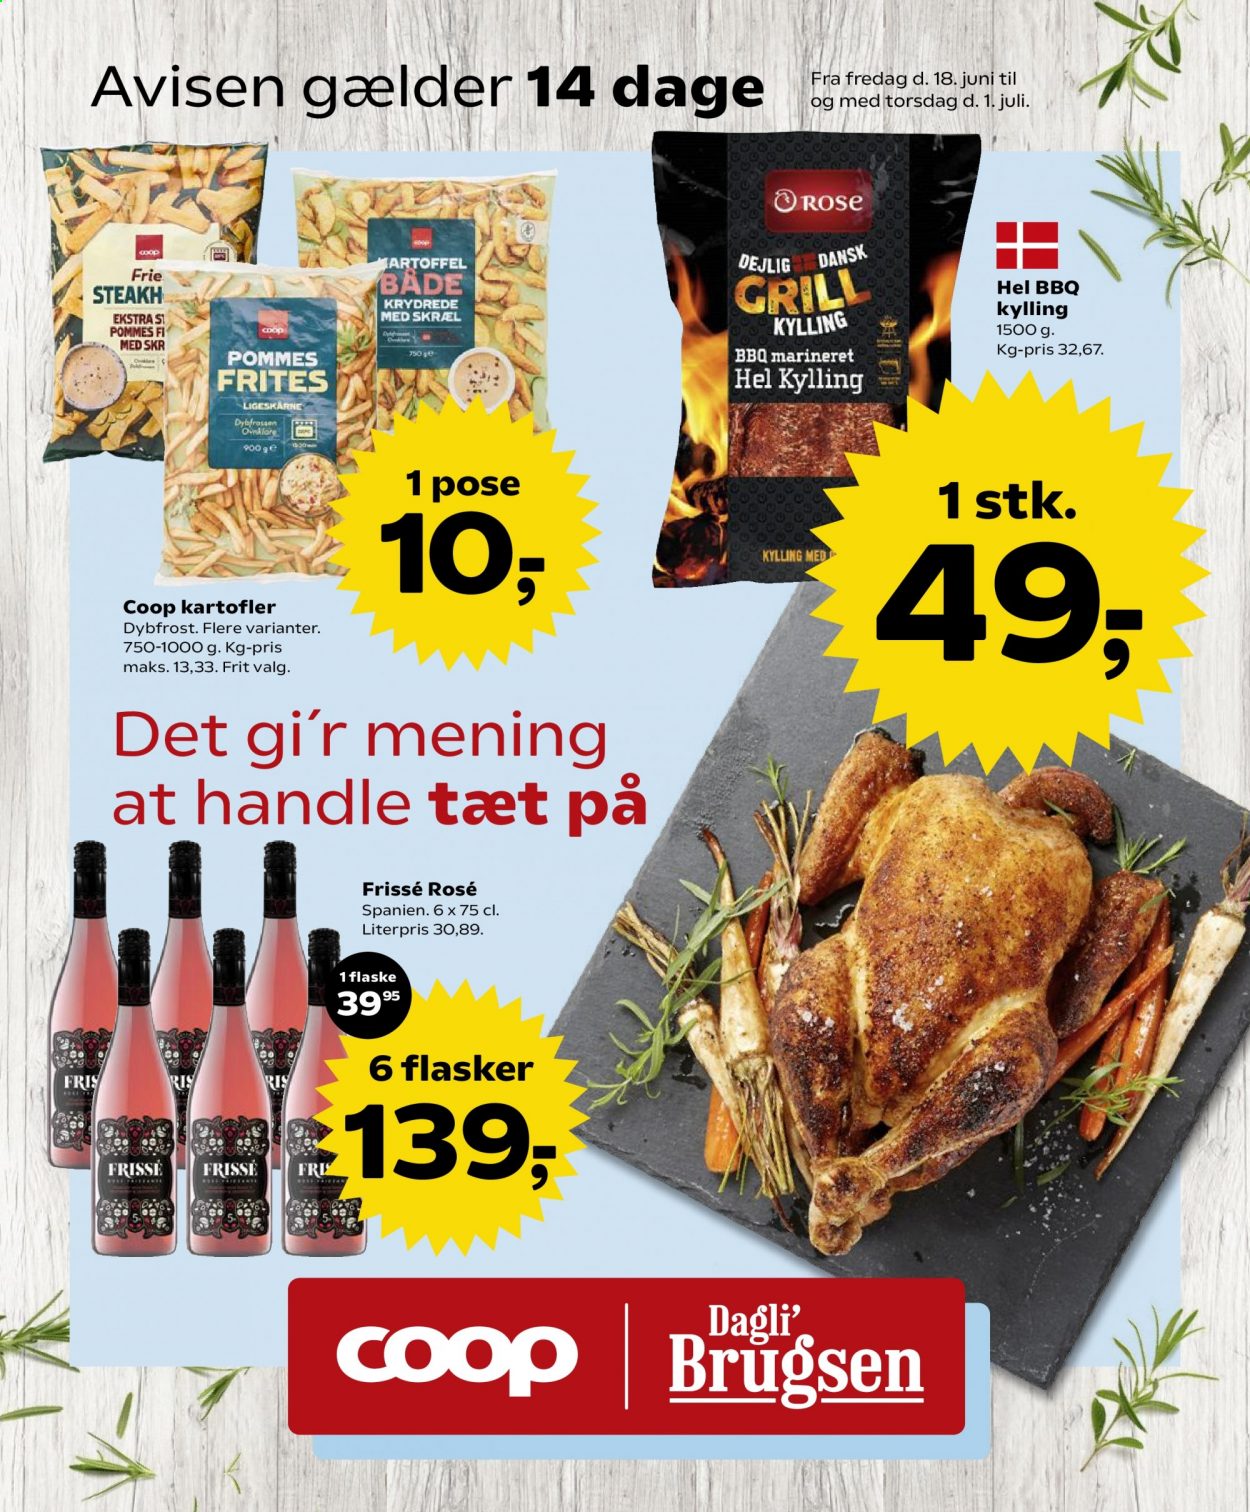 thumbnail - Dagli'Brugsen tilbud  - 18.6.2021 - 1.7.2021 - tilbudsprodukter - kartofler, kylling, ris. Side 1.